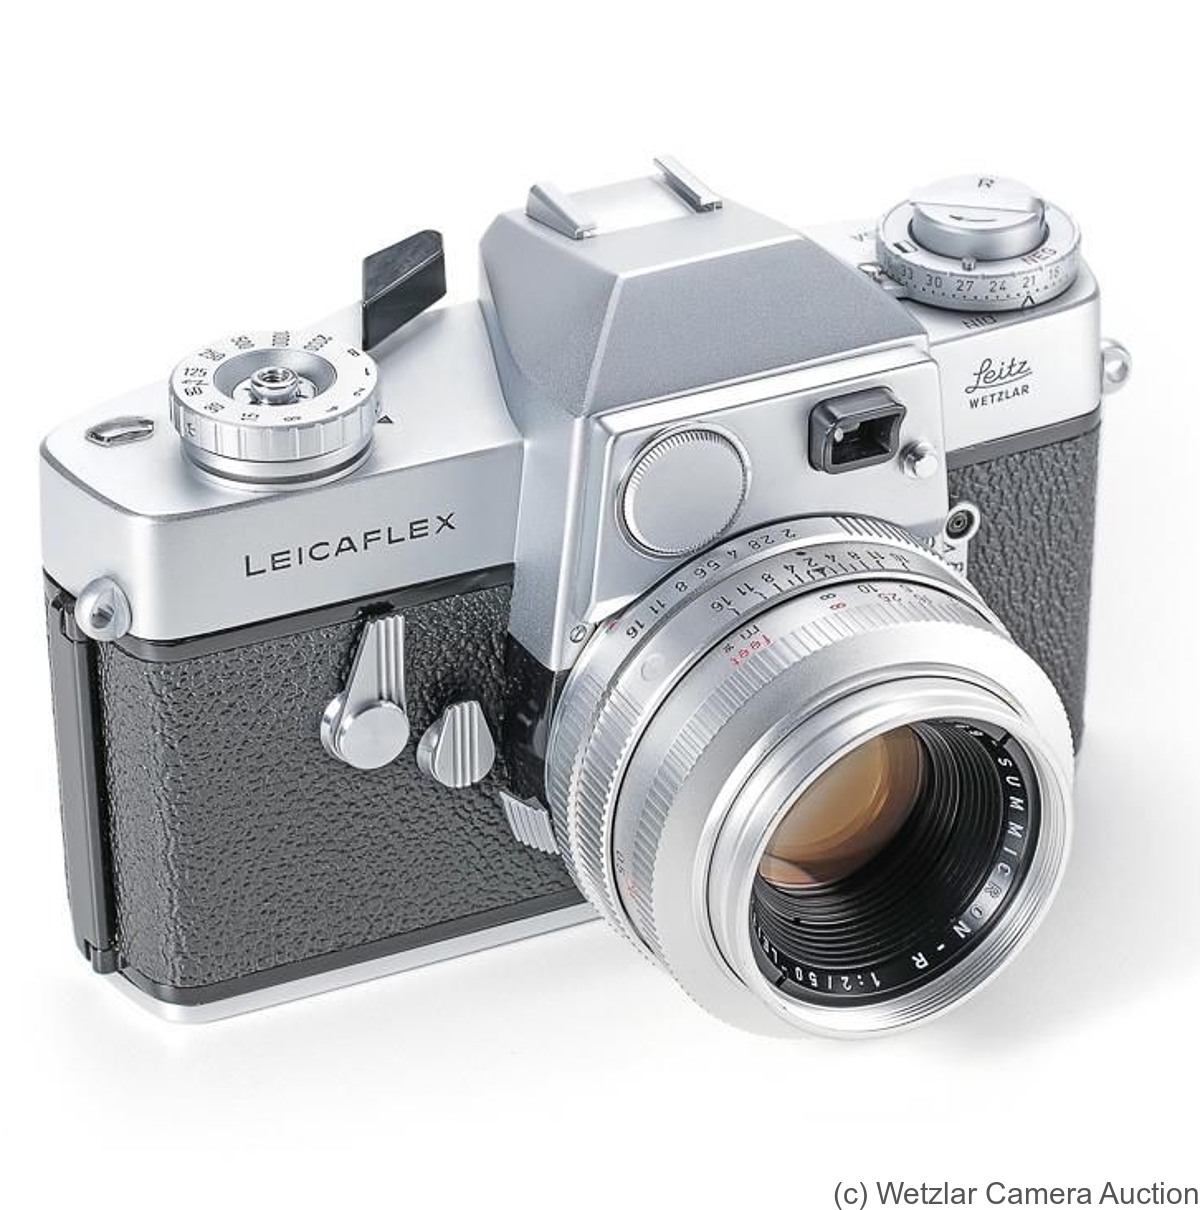 Leitz: Leicaflex camera